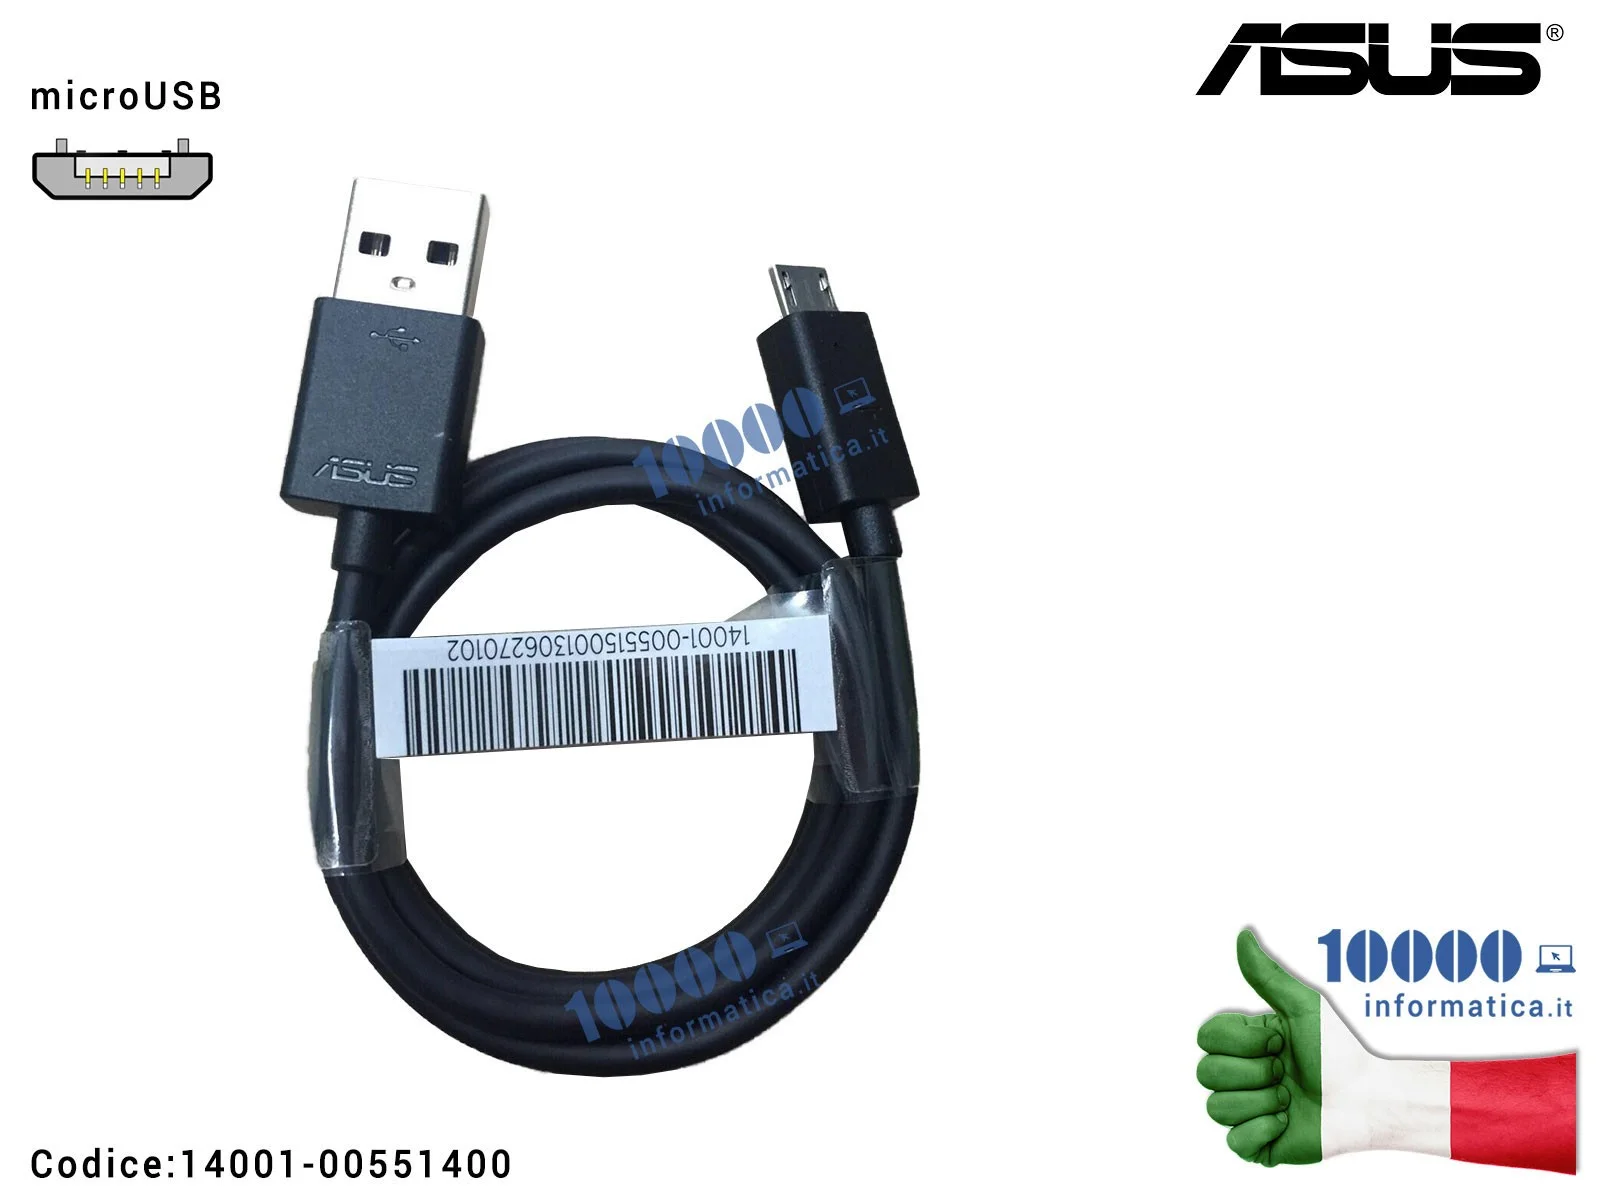 14001-00551400 Cavo Dati Ricarica microUSB ASUS [NERO] Smartphone ZenFone ZenPad 14001-00551300 14001-00551400 14G000515821 1...